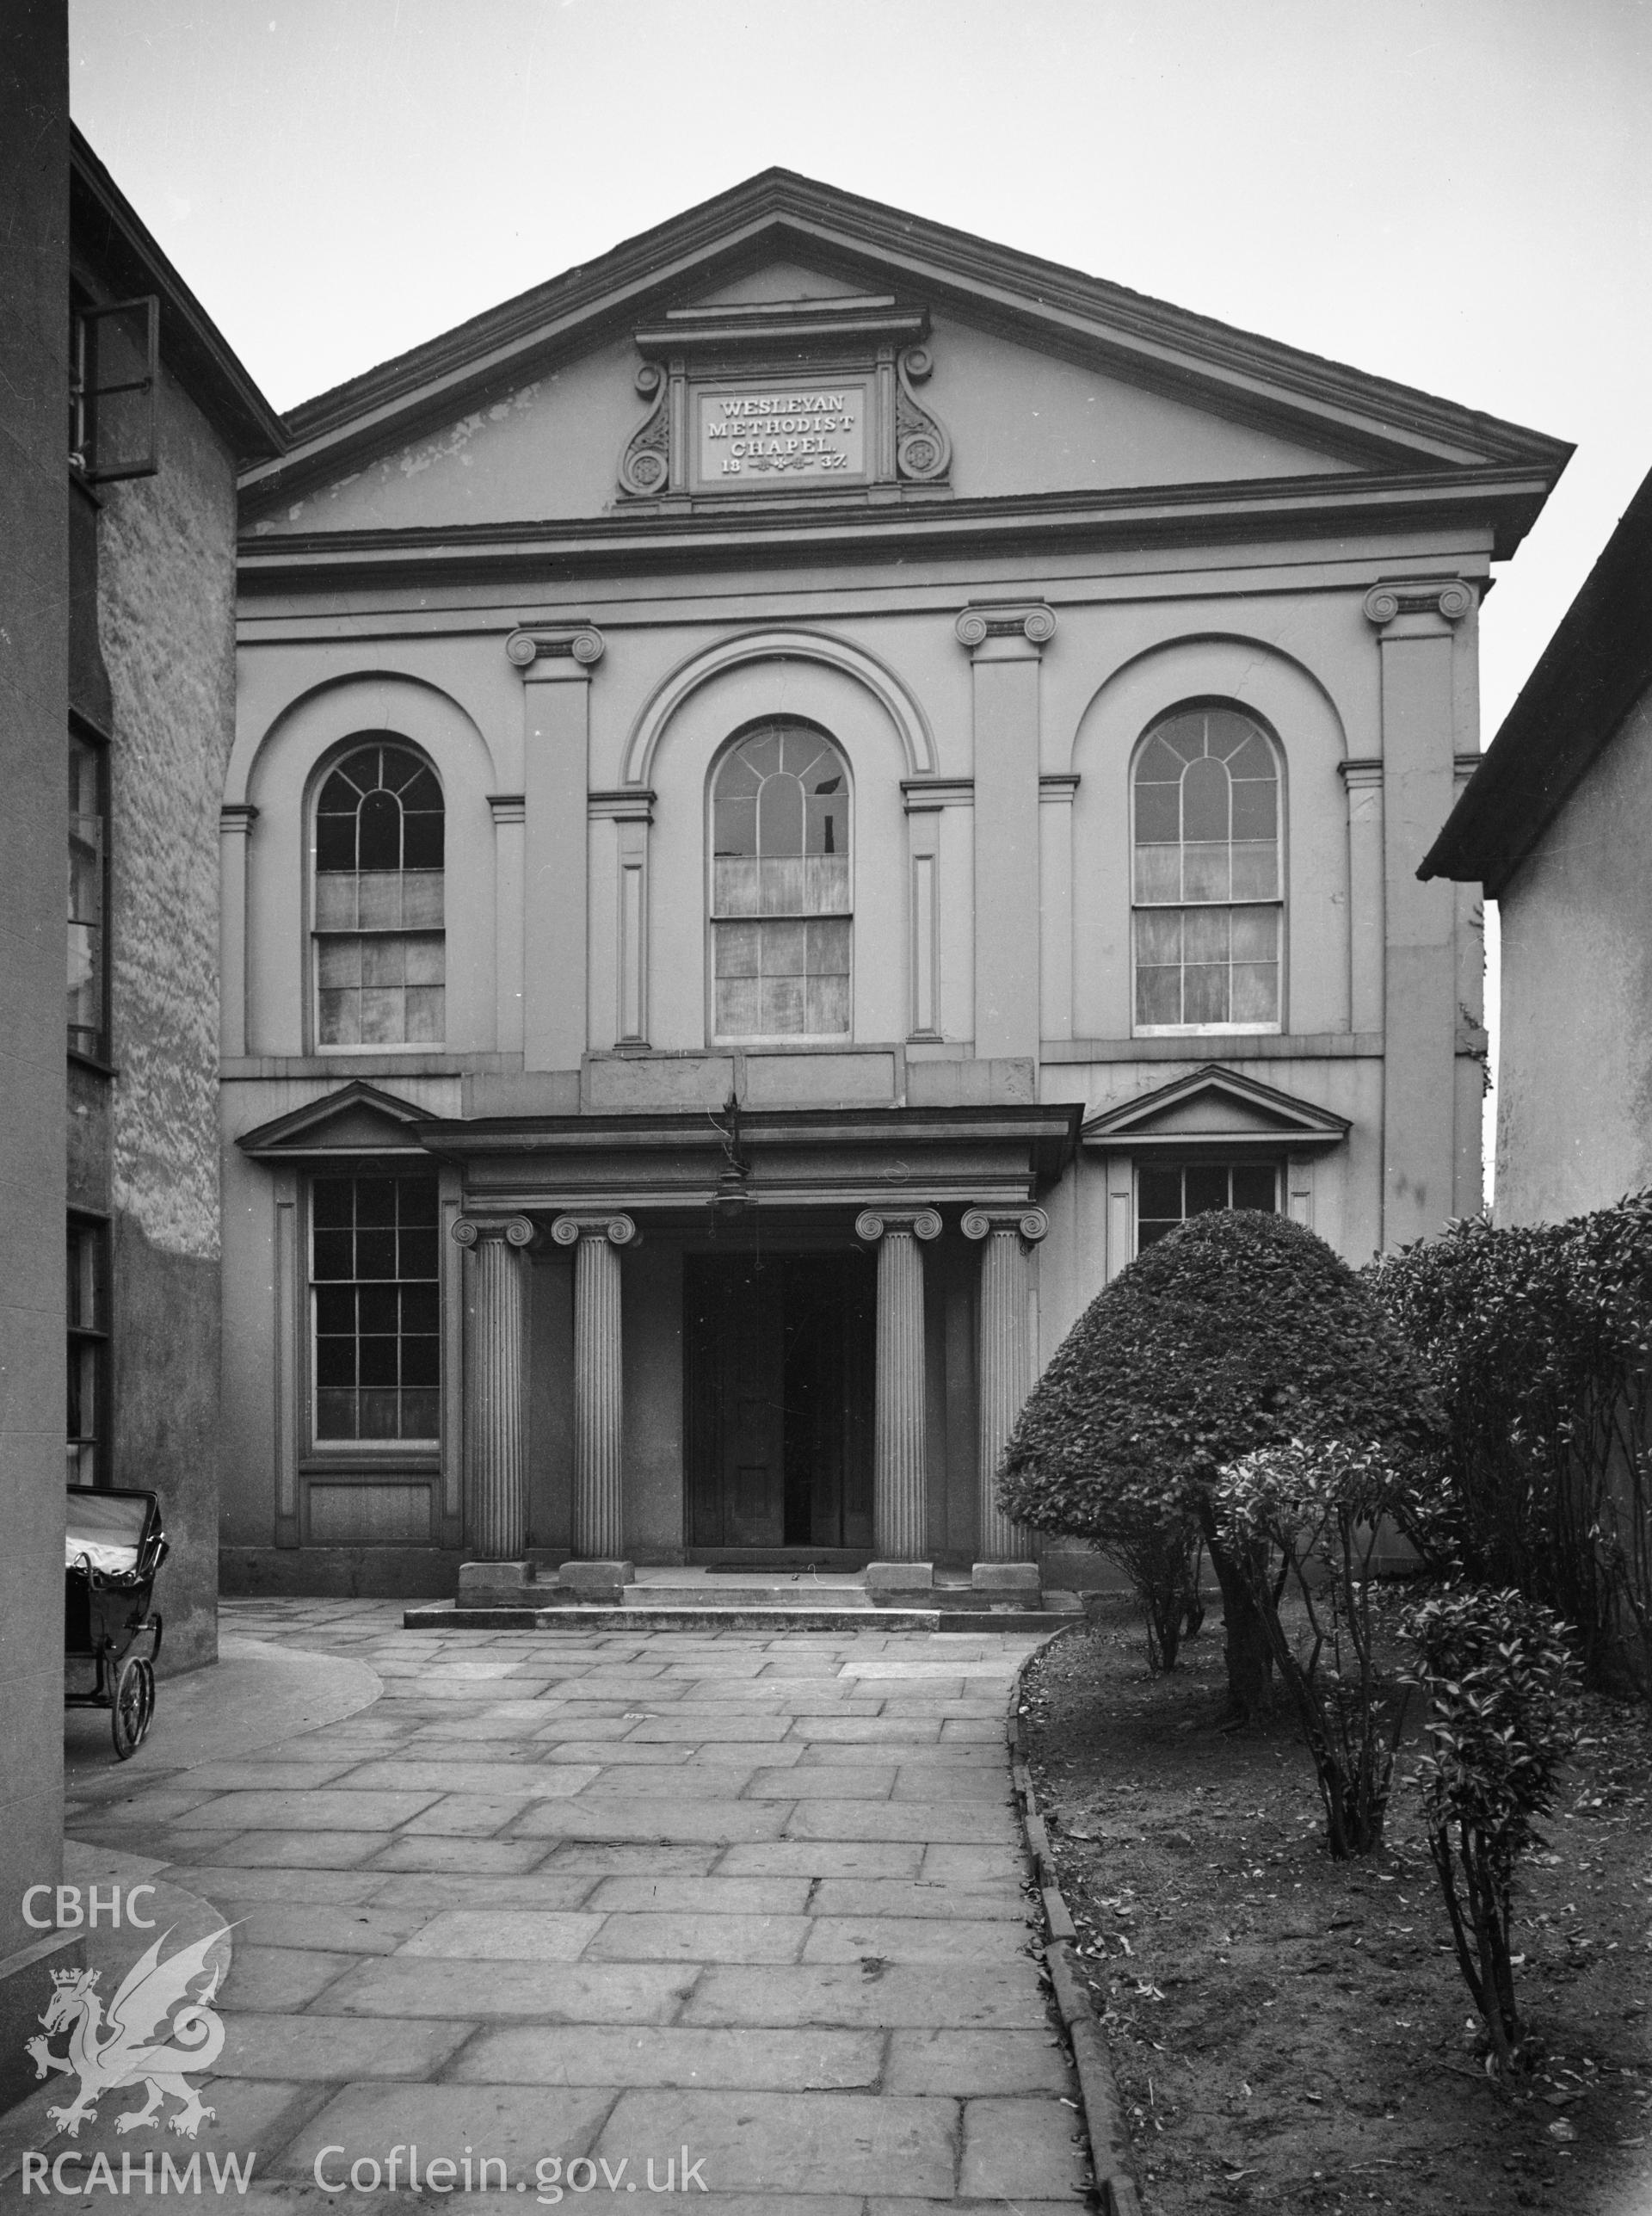 Black and white photo of St James Street Wesleyan Methodist Chapel, taken by RCAHMW, 1941.